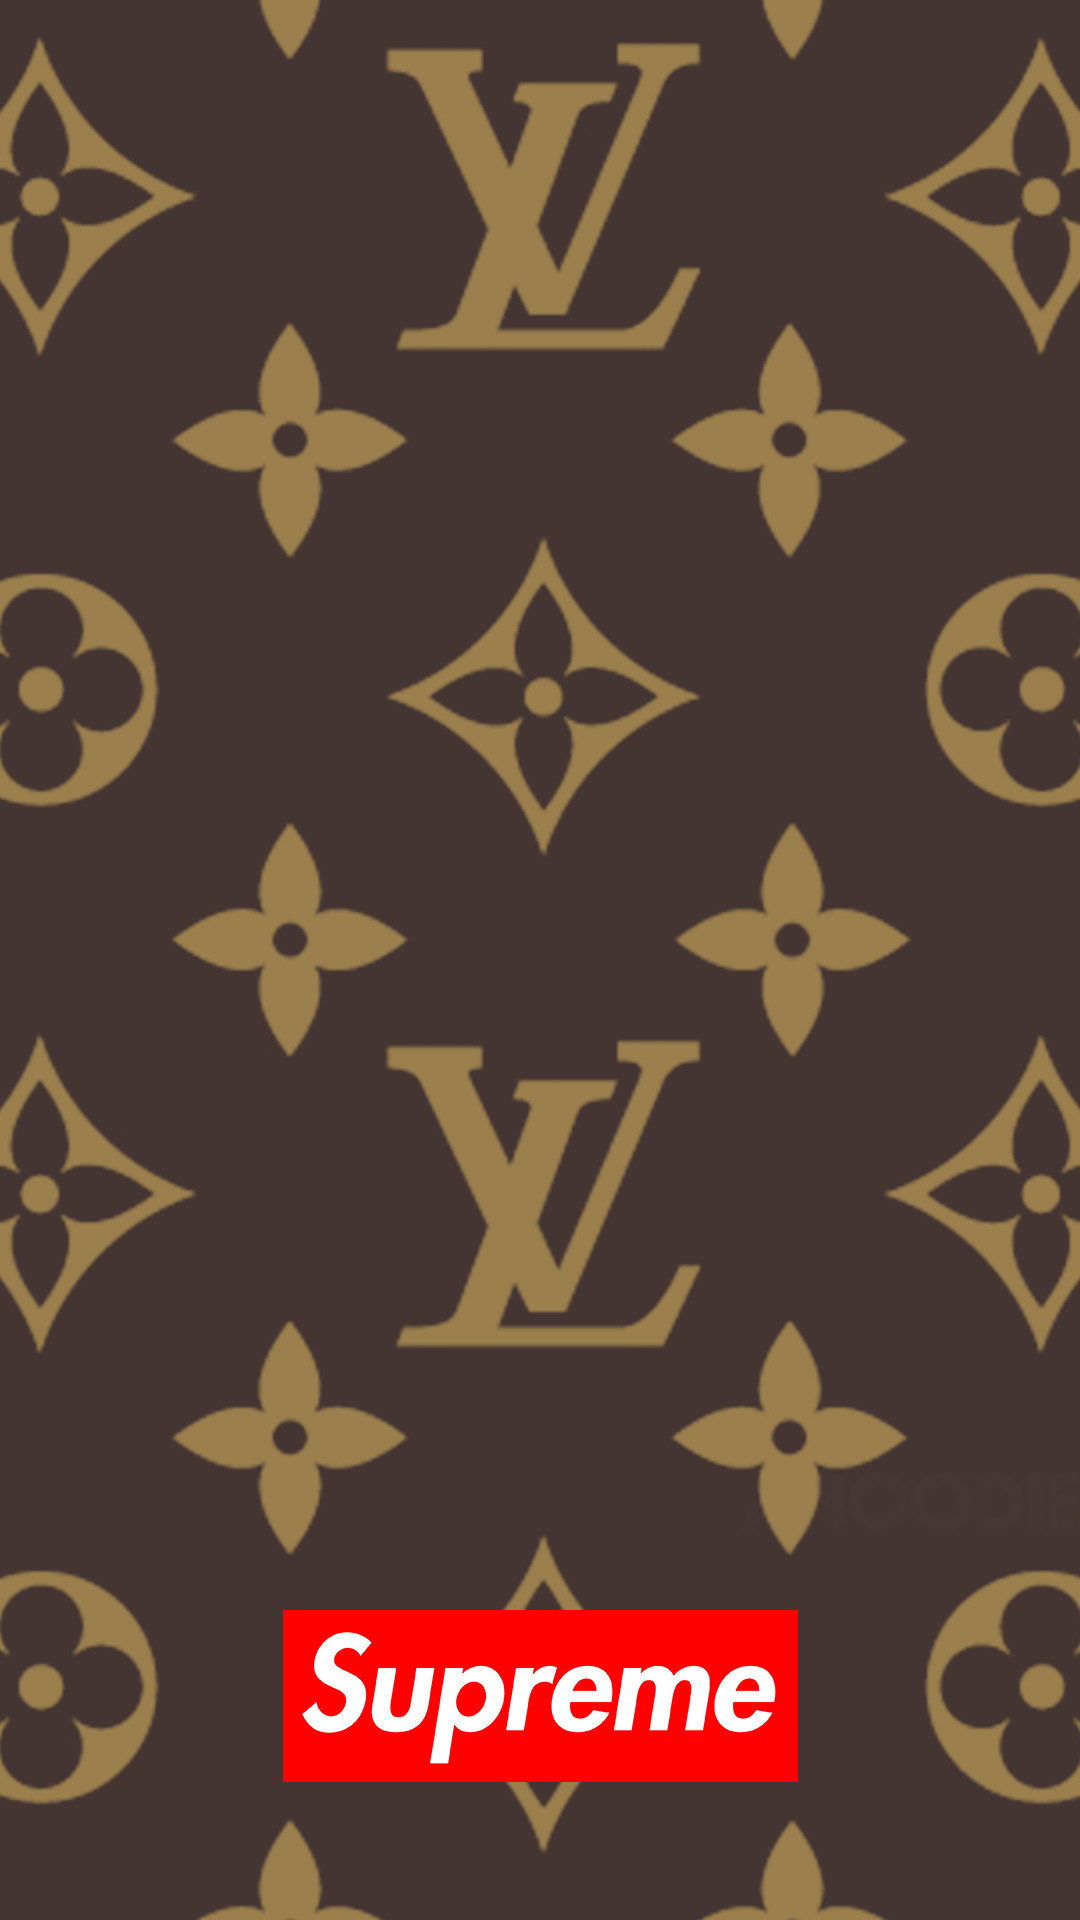 Louis Vuitton Wallpapers ·① WallpaperTag